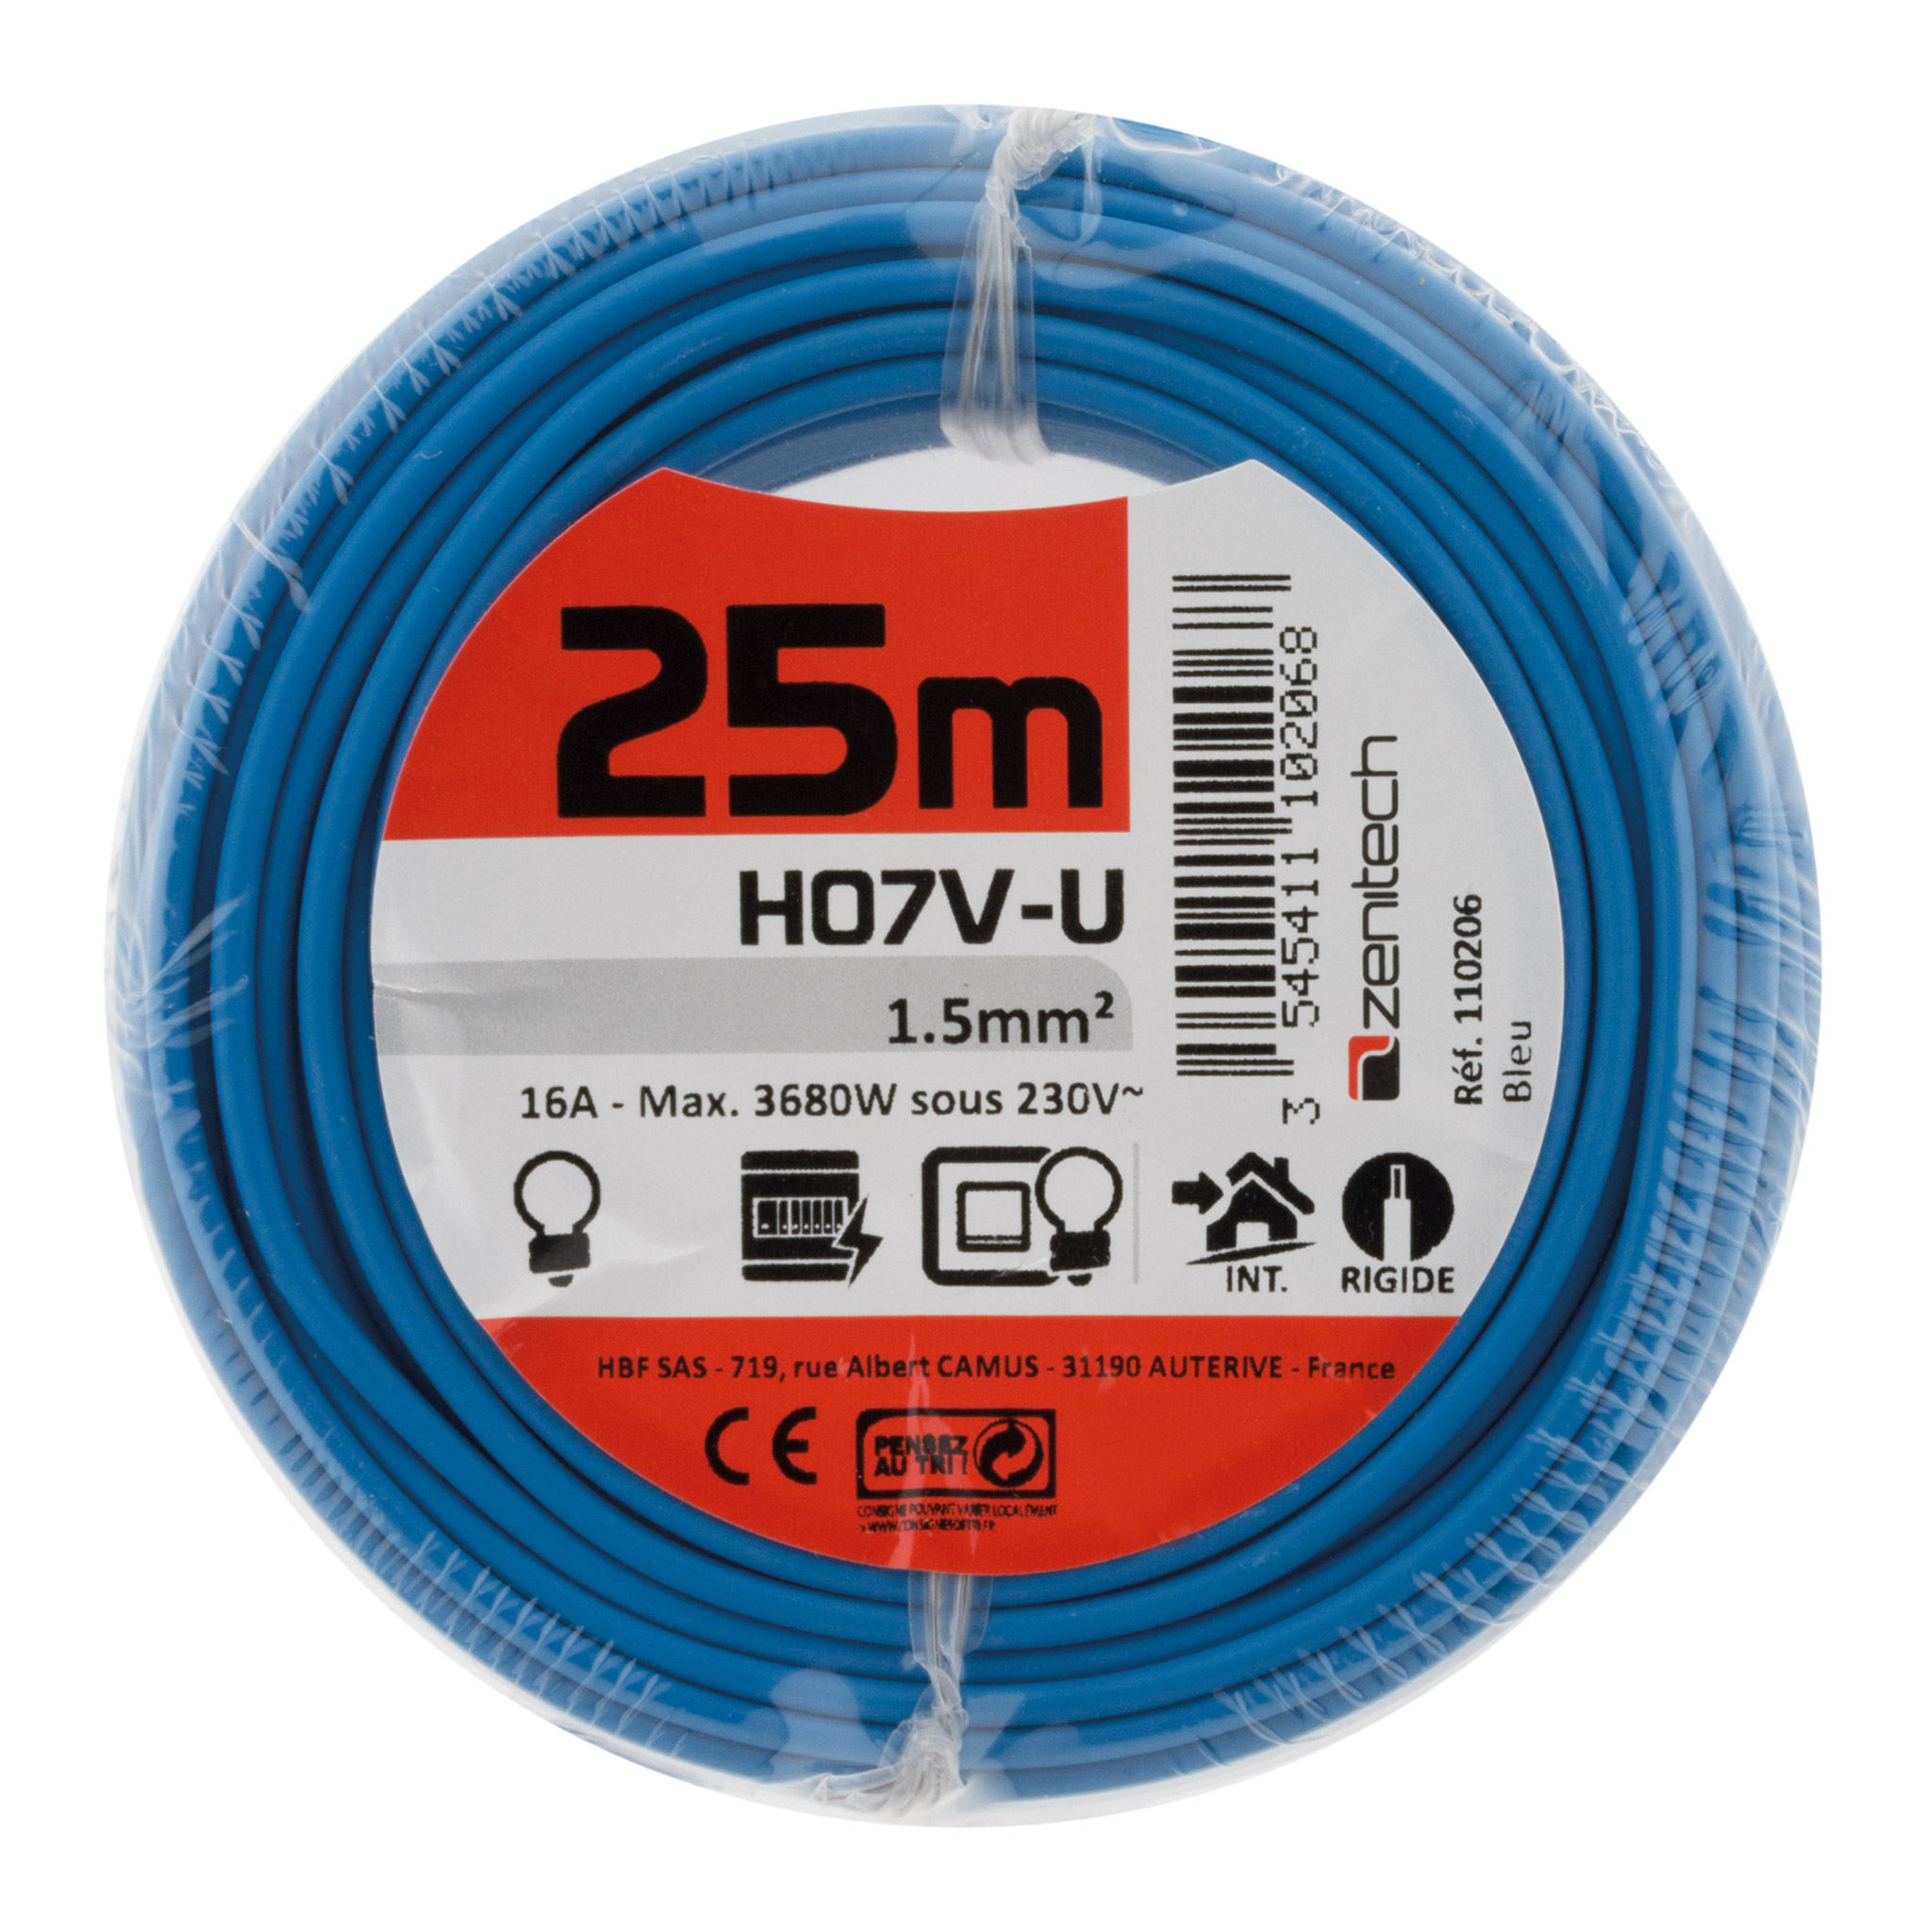 Cable ho7vu 1.5 bleu 25m - PLASTO